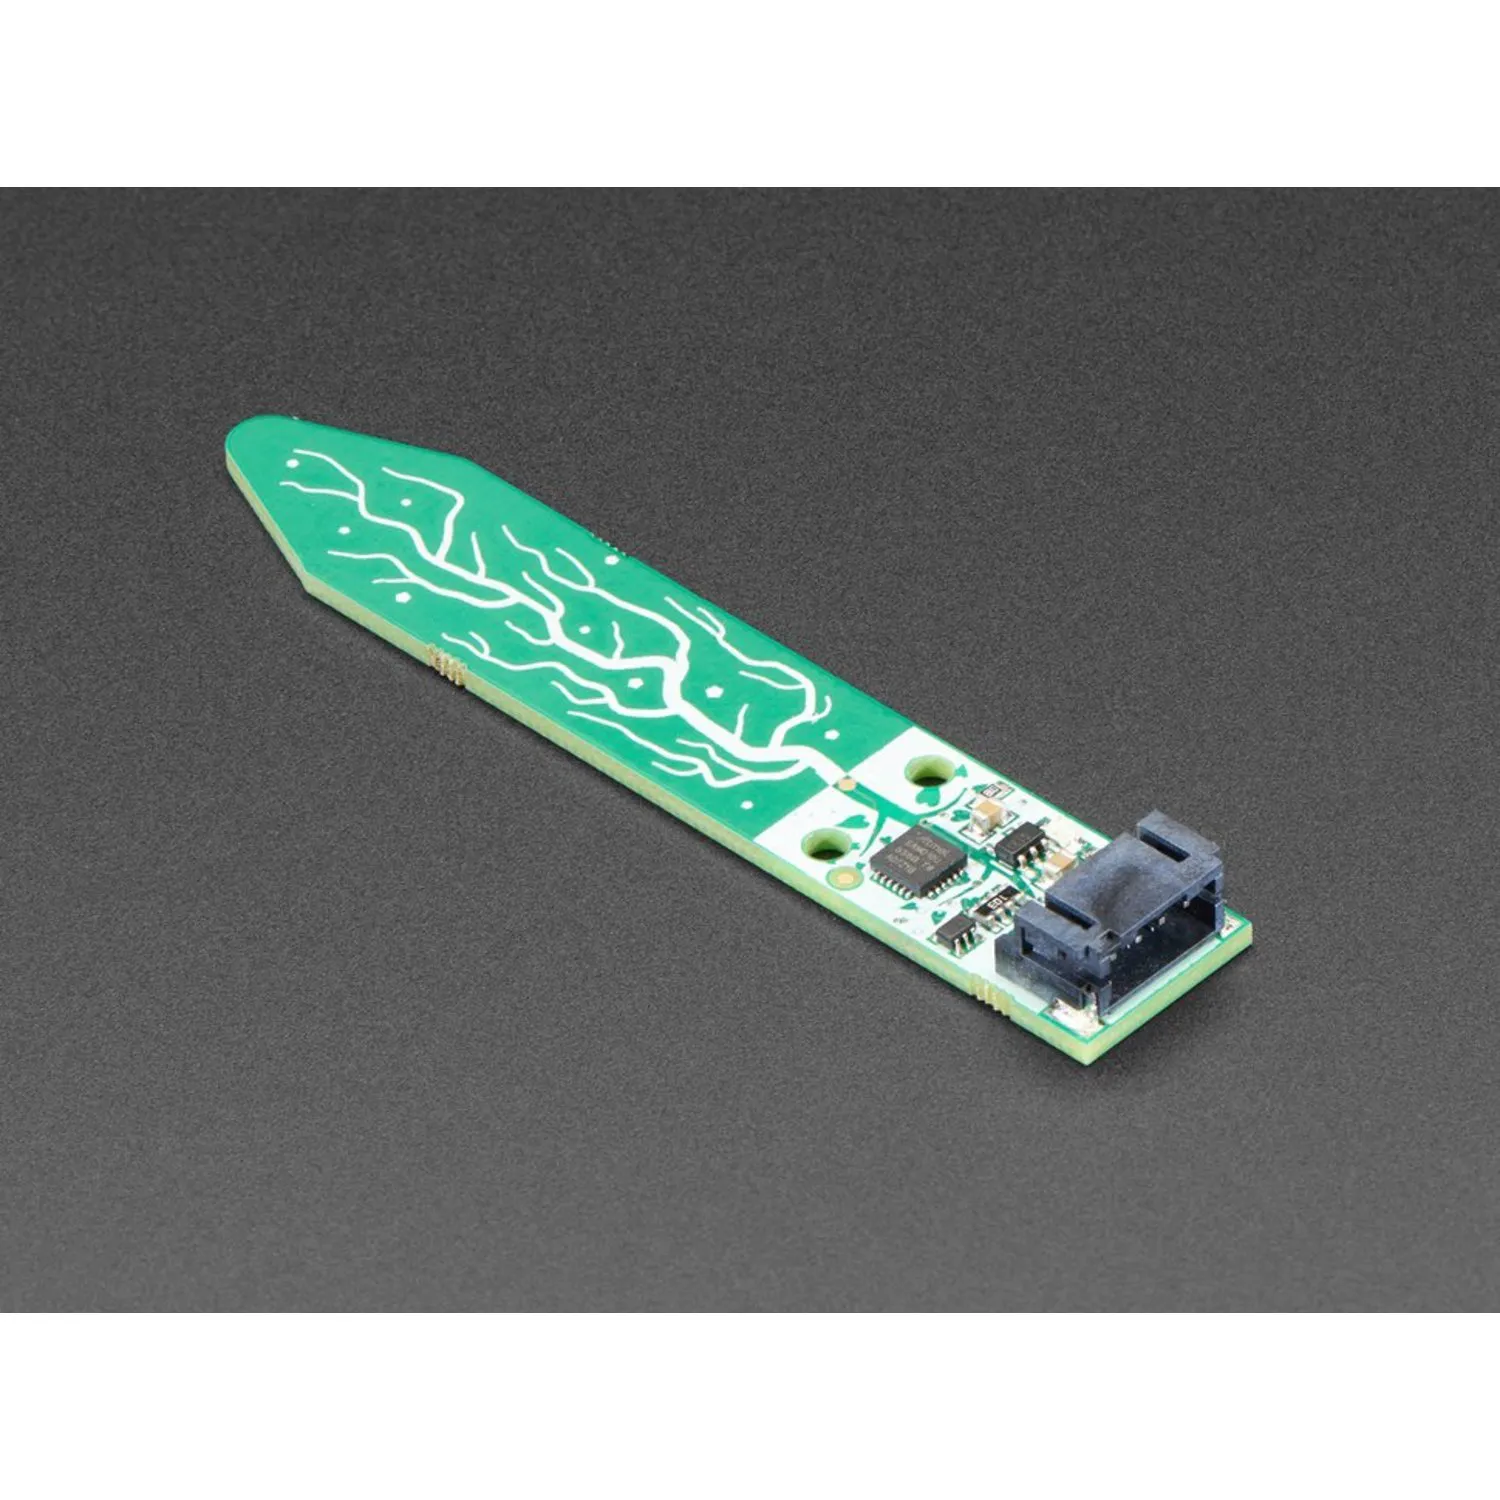 Photo of Adafruit STEMMA Soil Sensor - I2C Capacitive Moisture Sensor